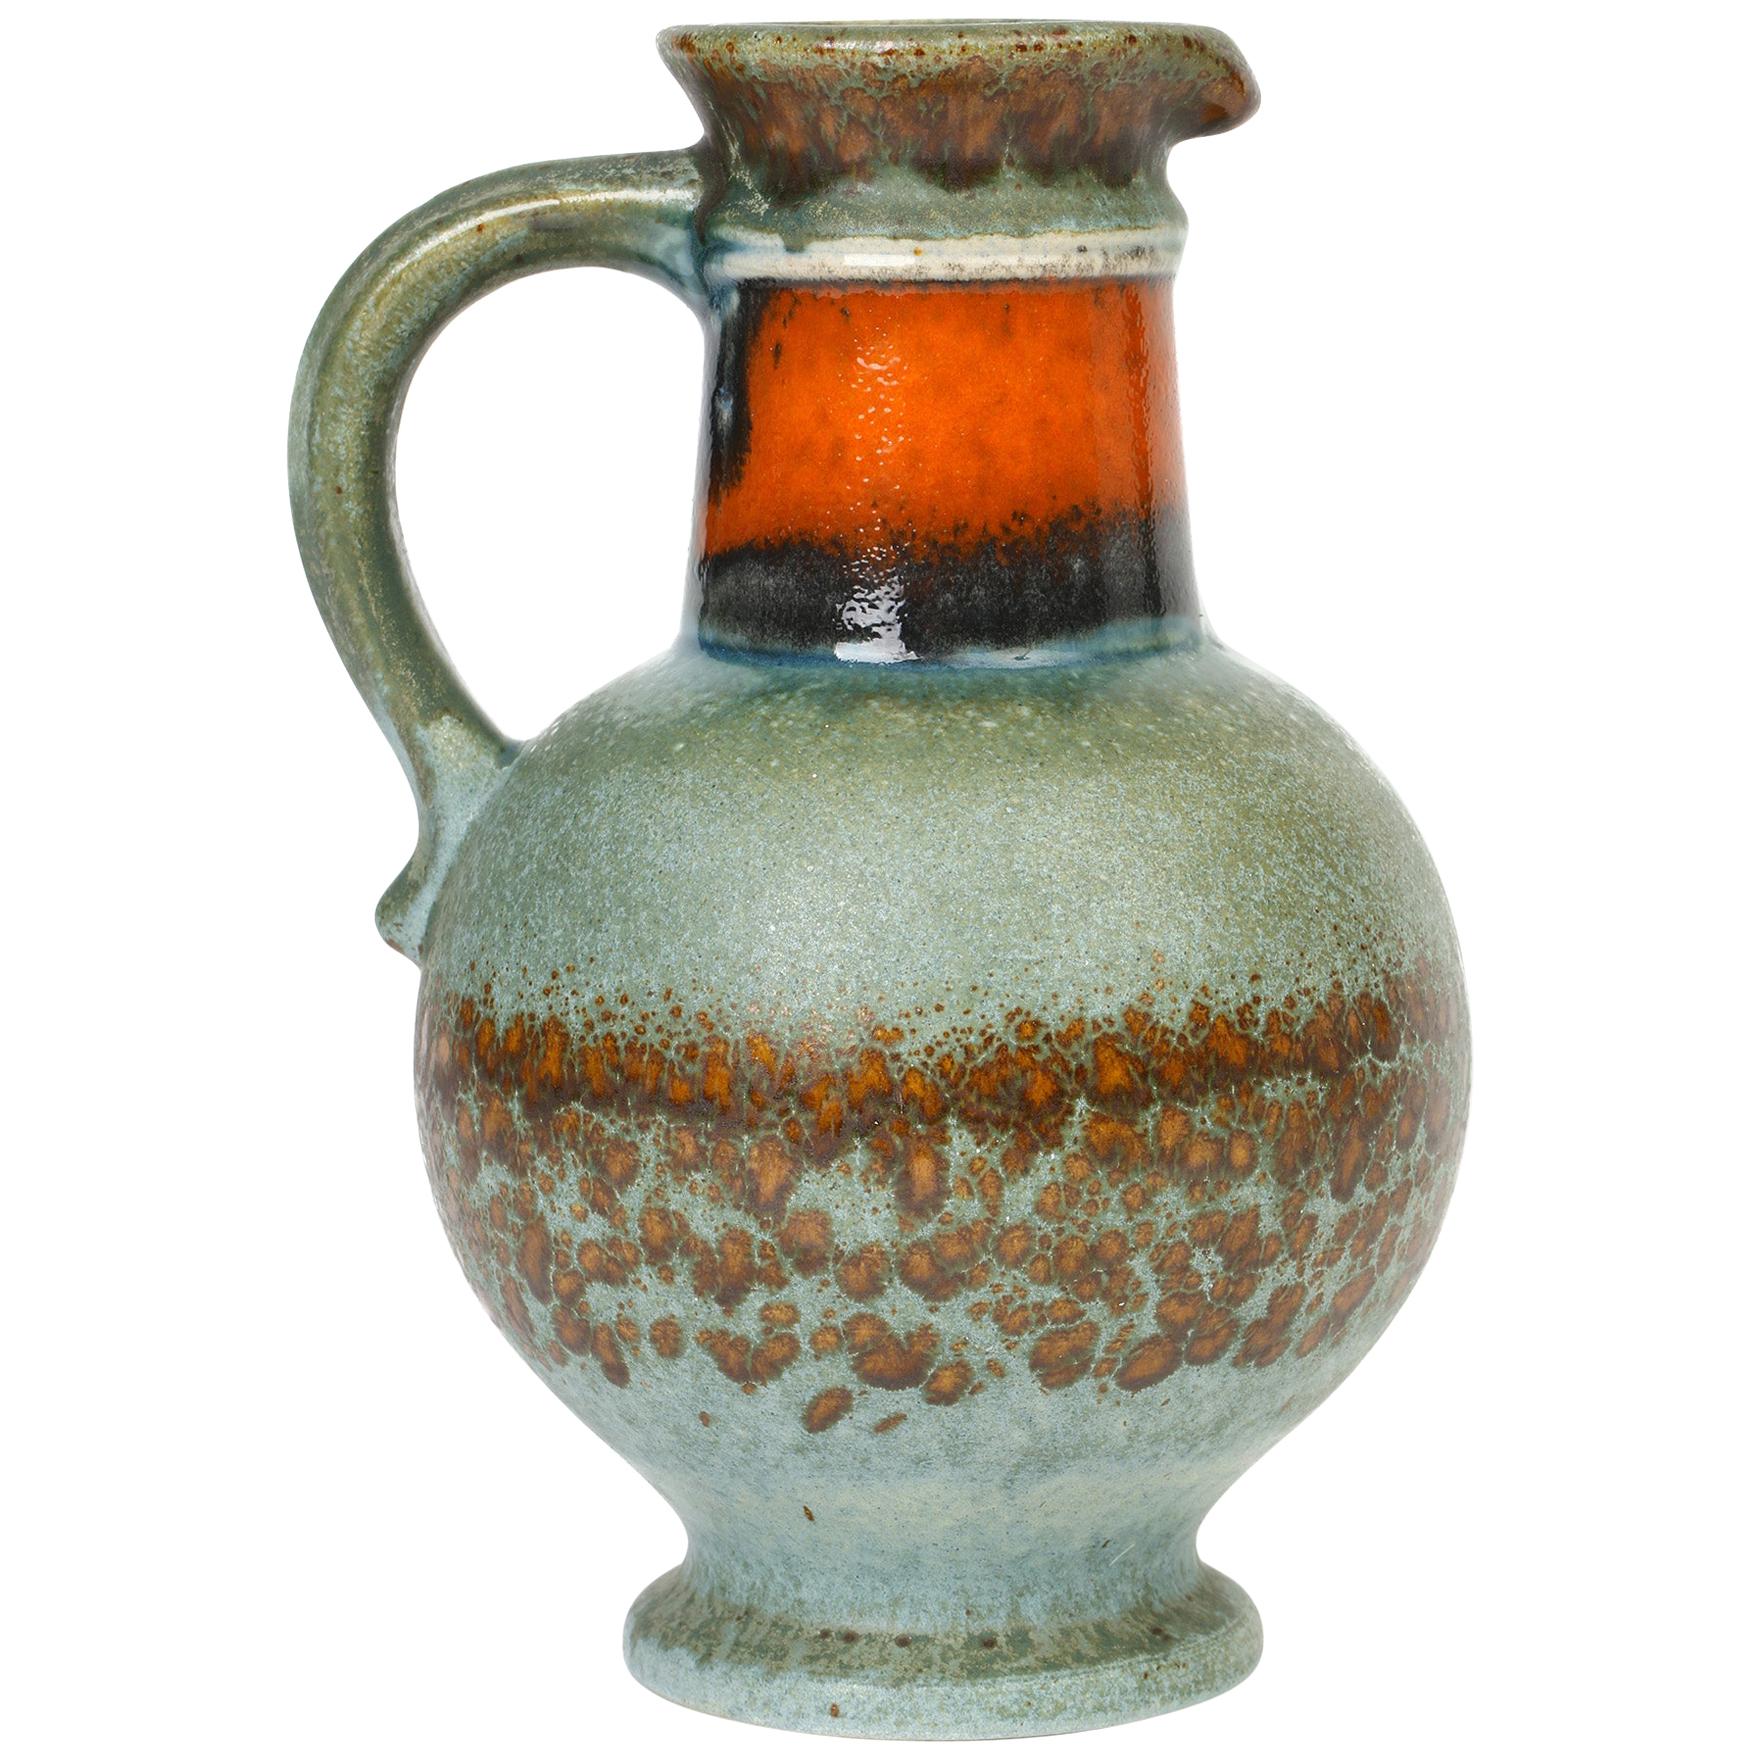 Ubelacker West German Midcentury Art Pottery Handled Vase